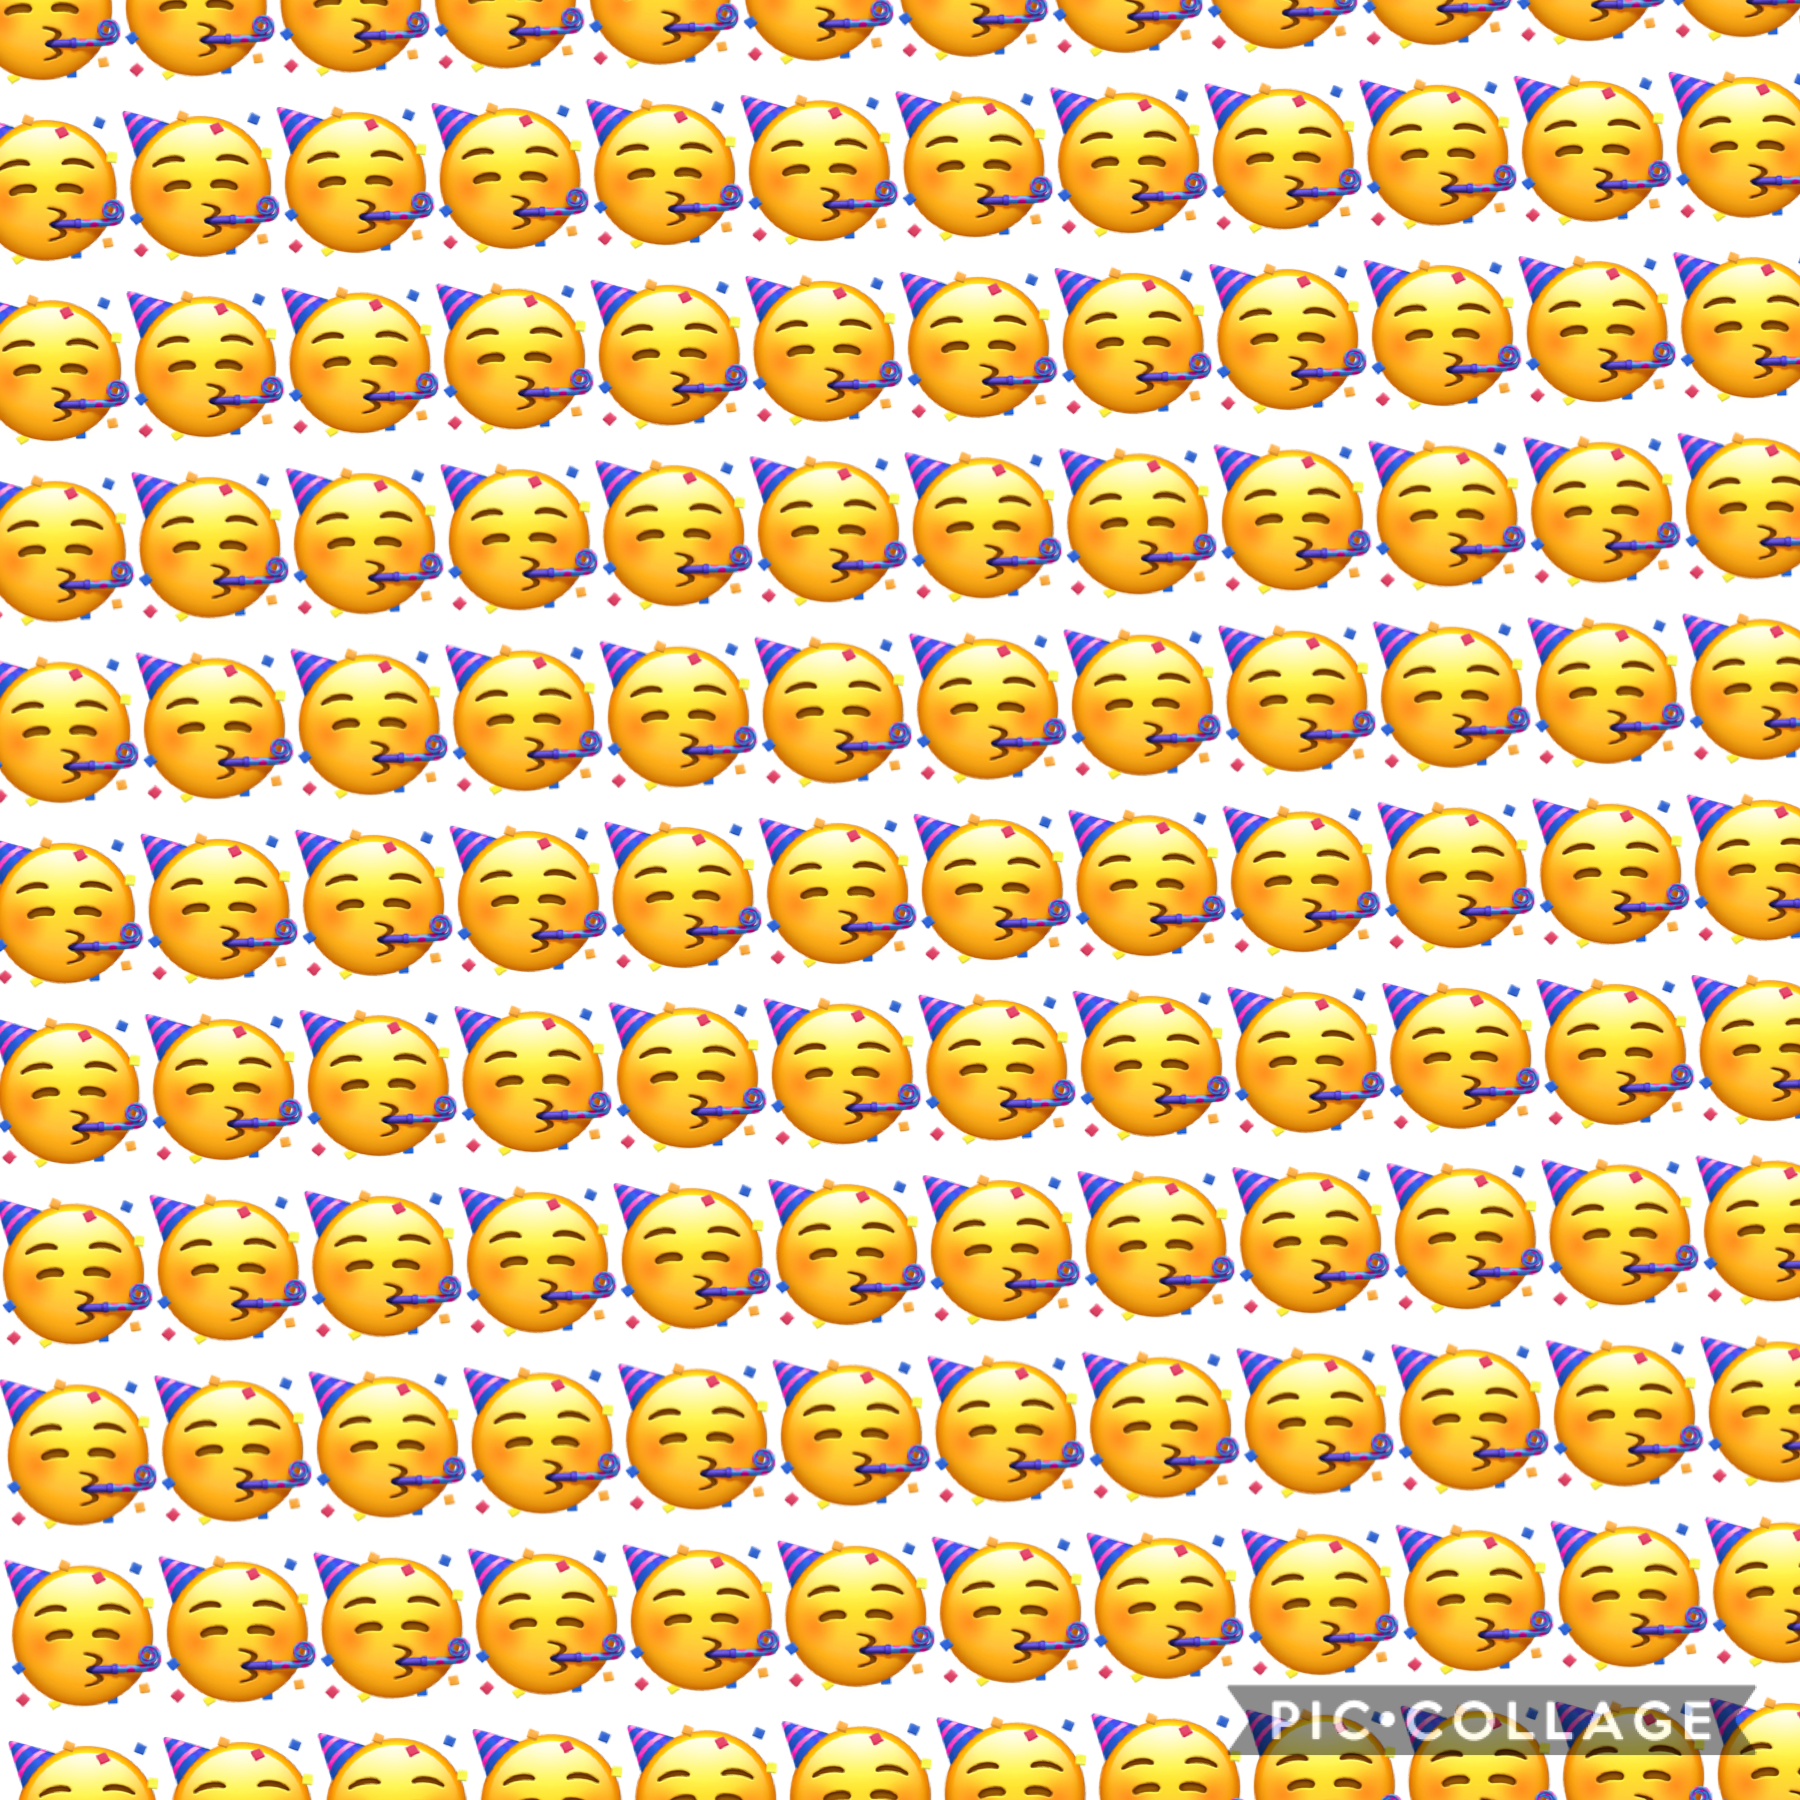 Any emoji requests?